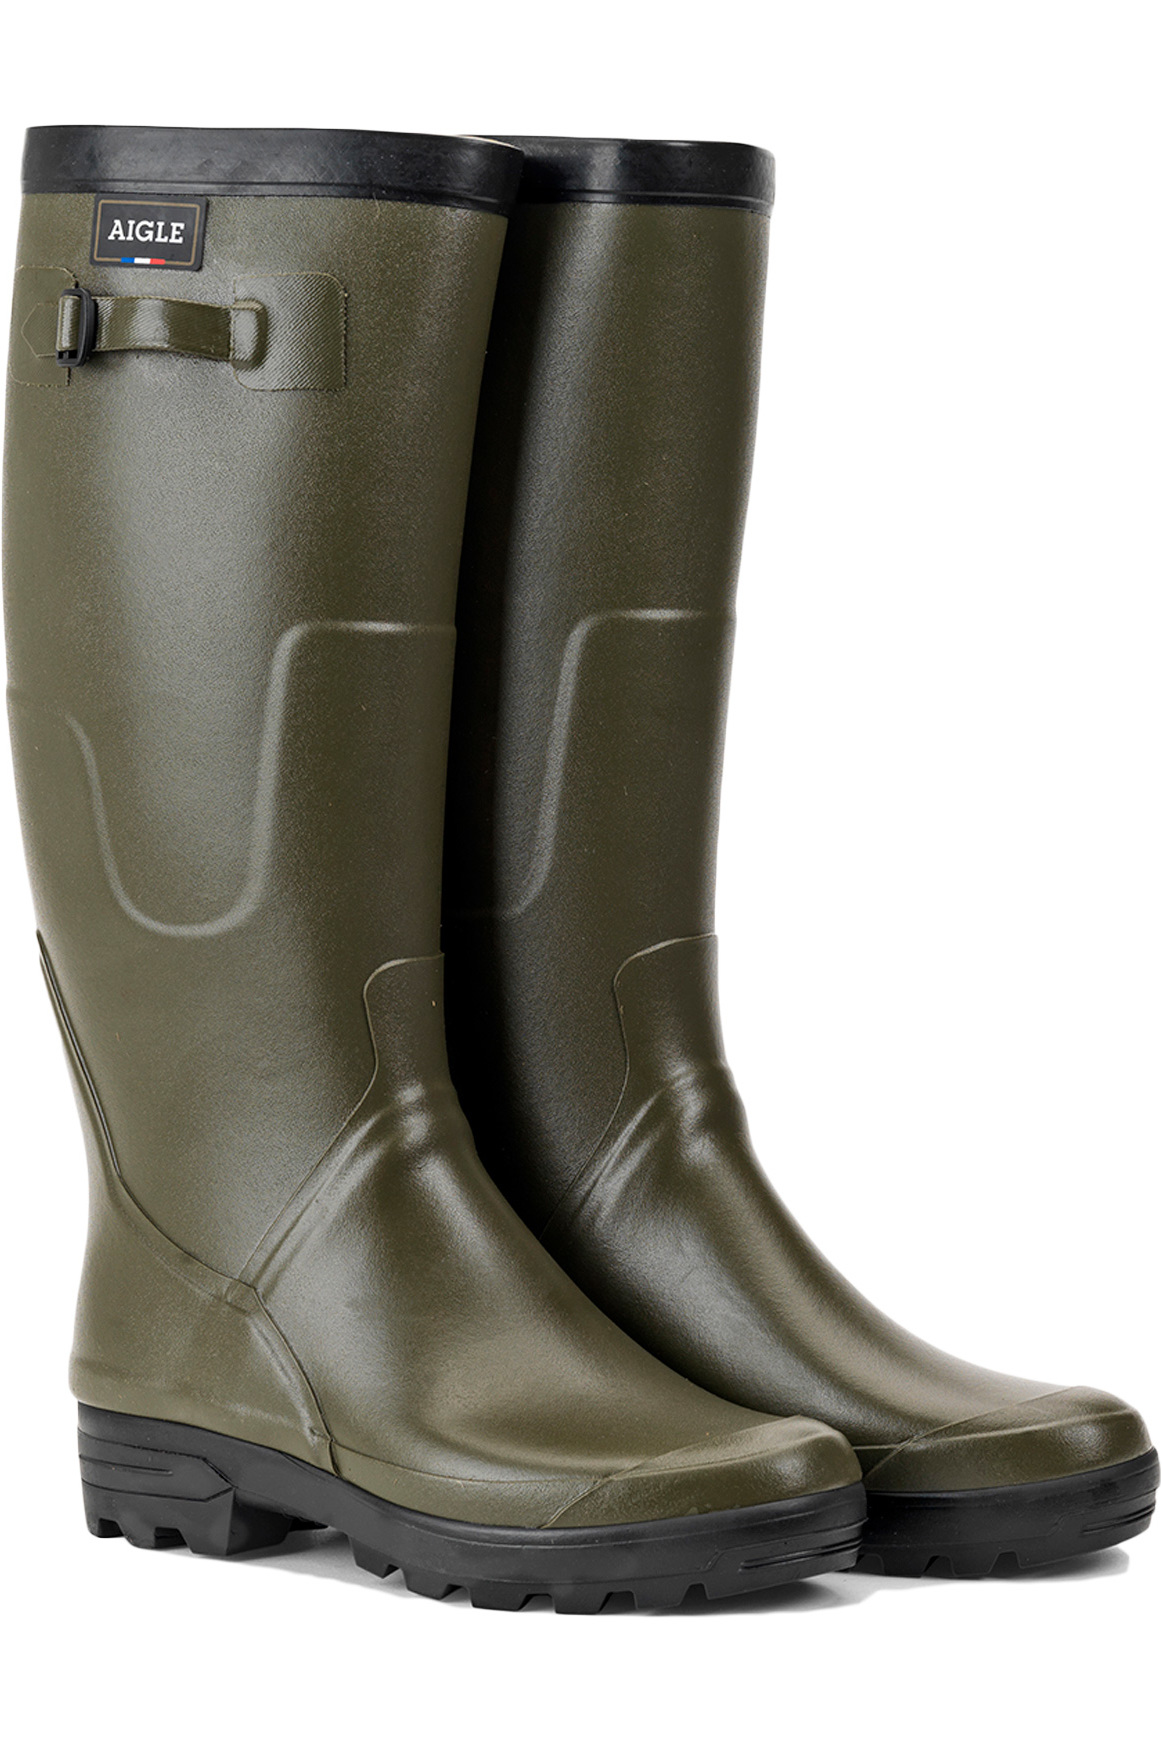 2021 Benyl Wellie Boots - Khaki - Womens - Footwear - Wellies